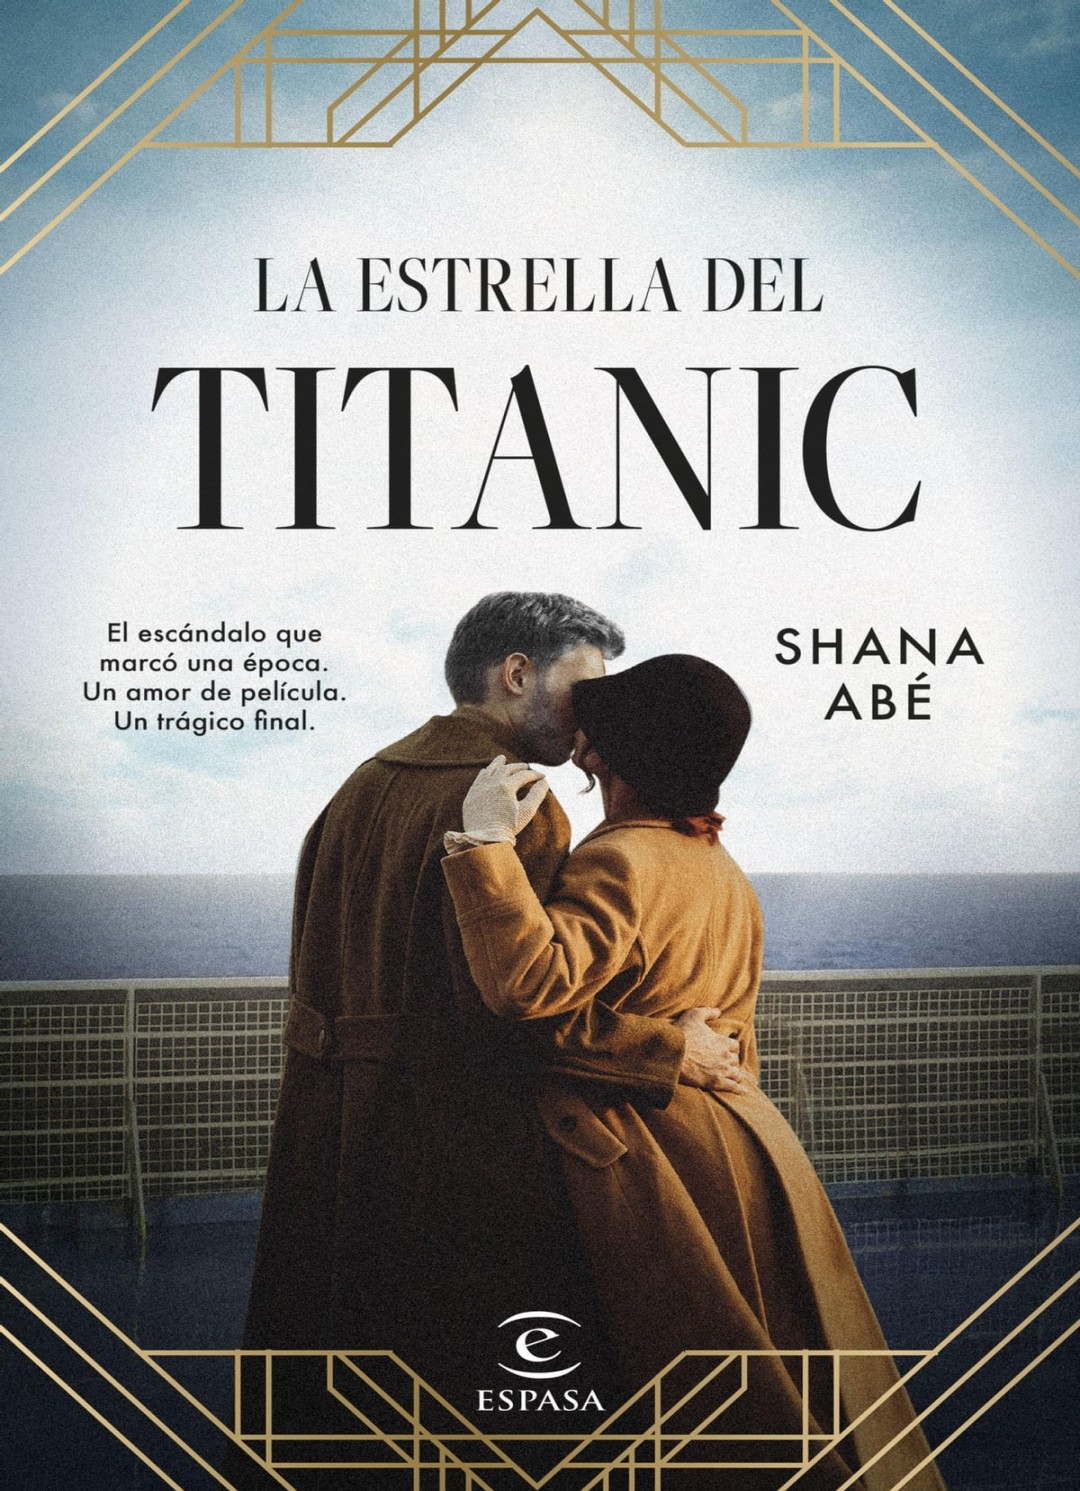 La estrella del Titanic ebooks by Shana Abé - Rakuten Kobo